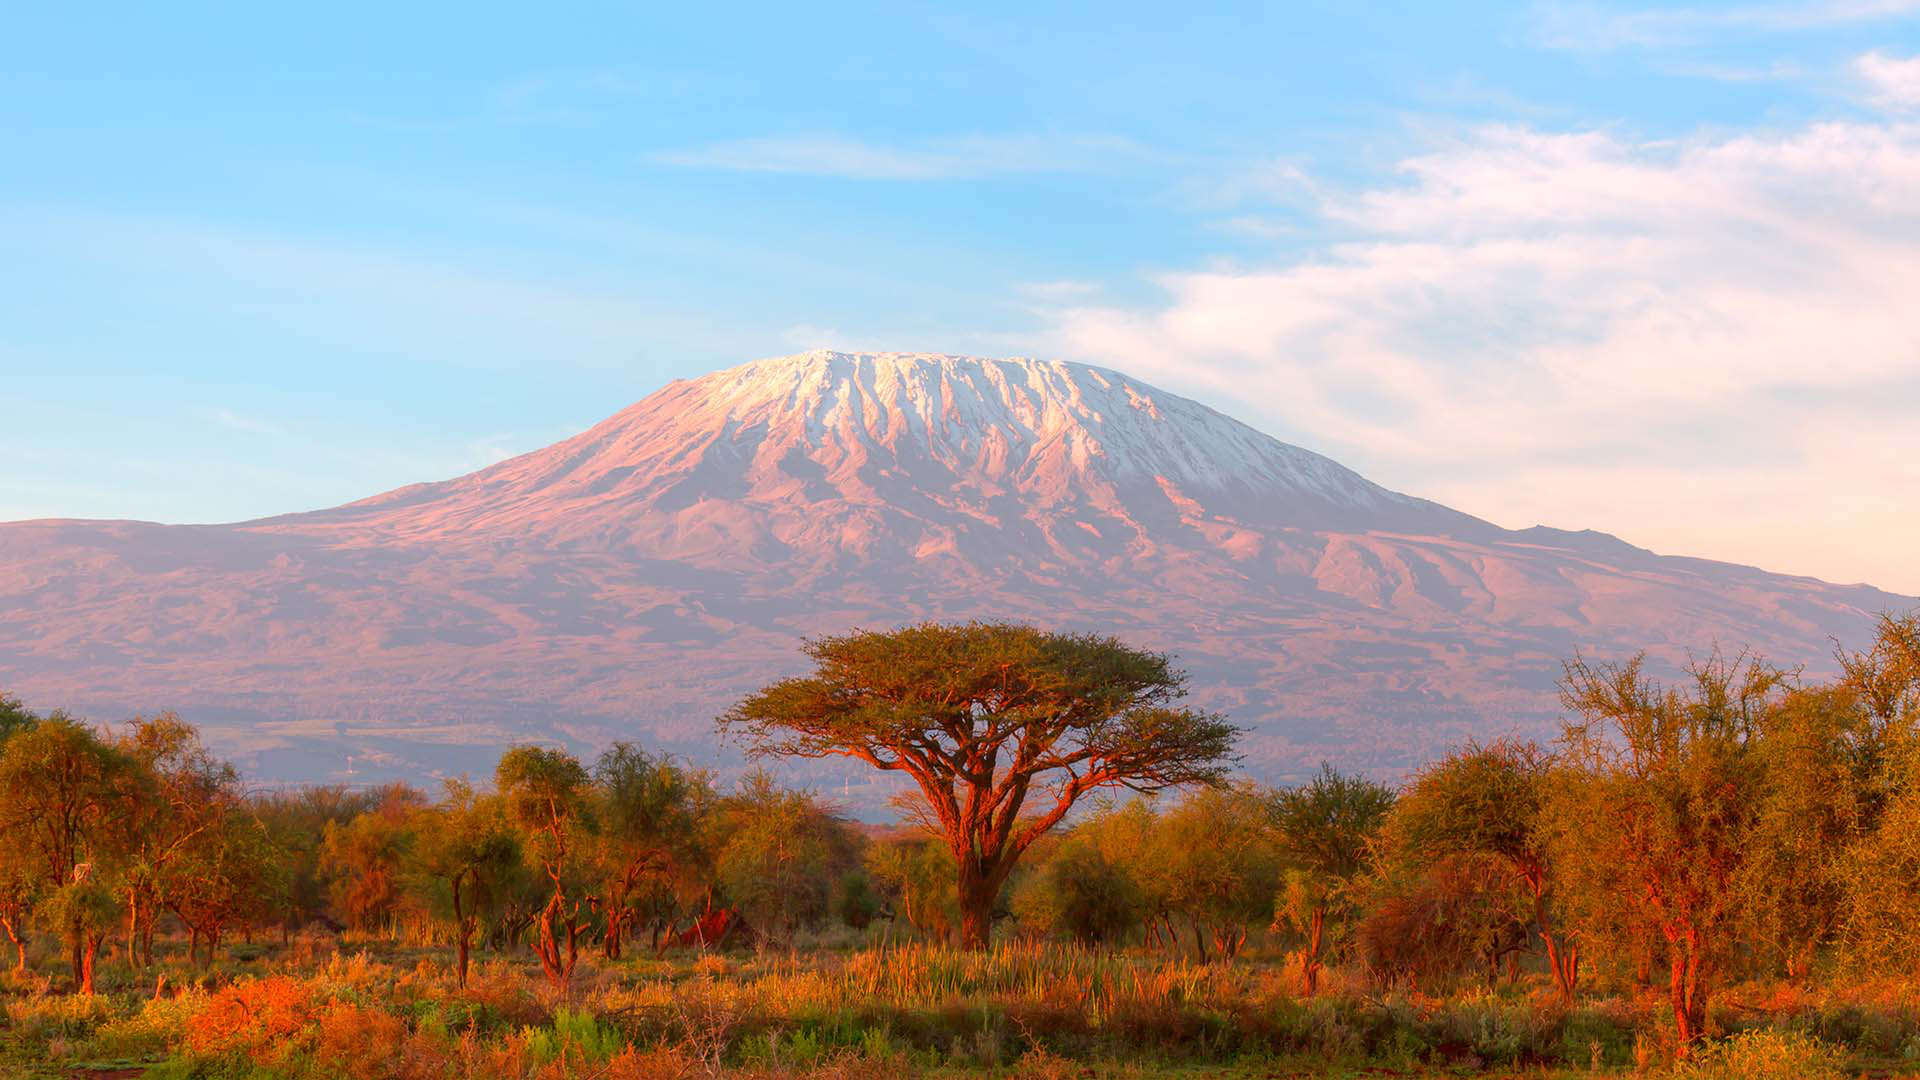 A view of Mount Kilimanjaro in Tanzania